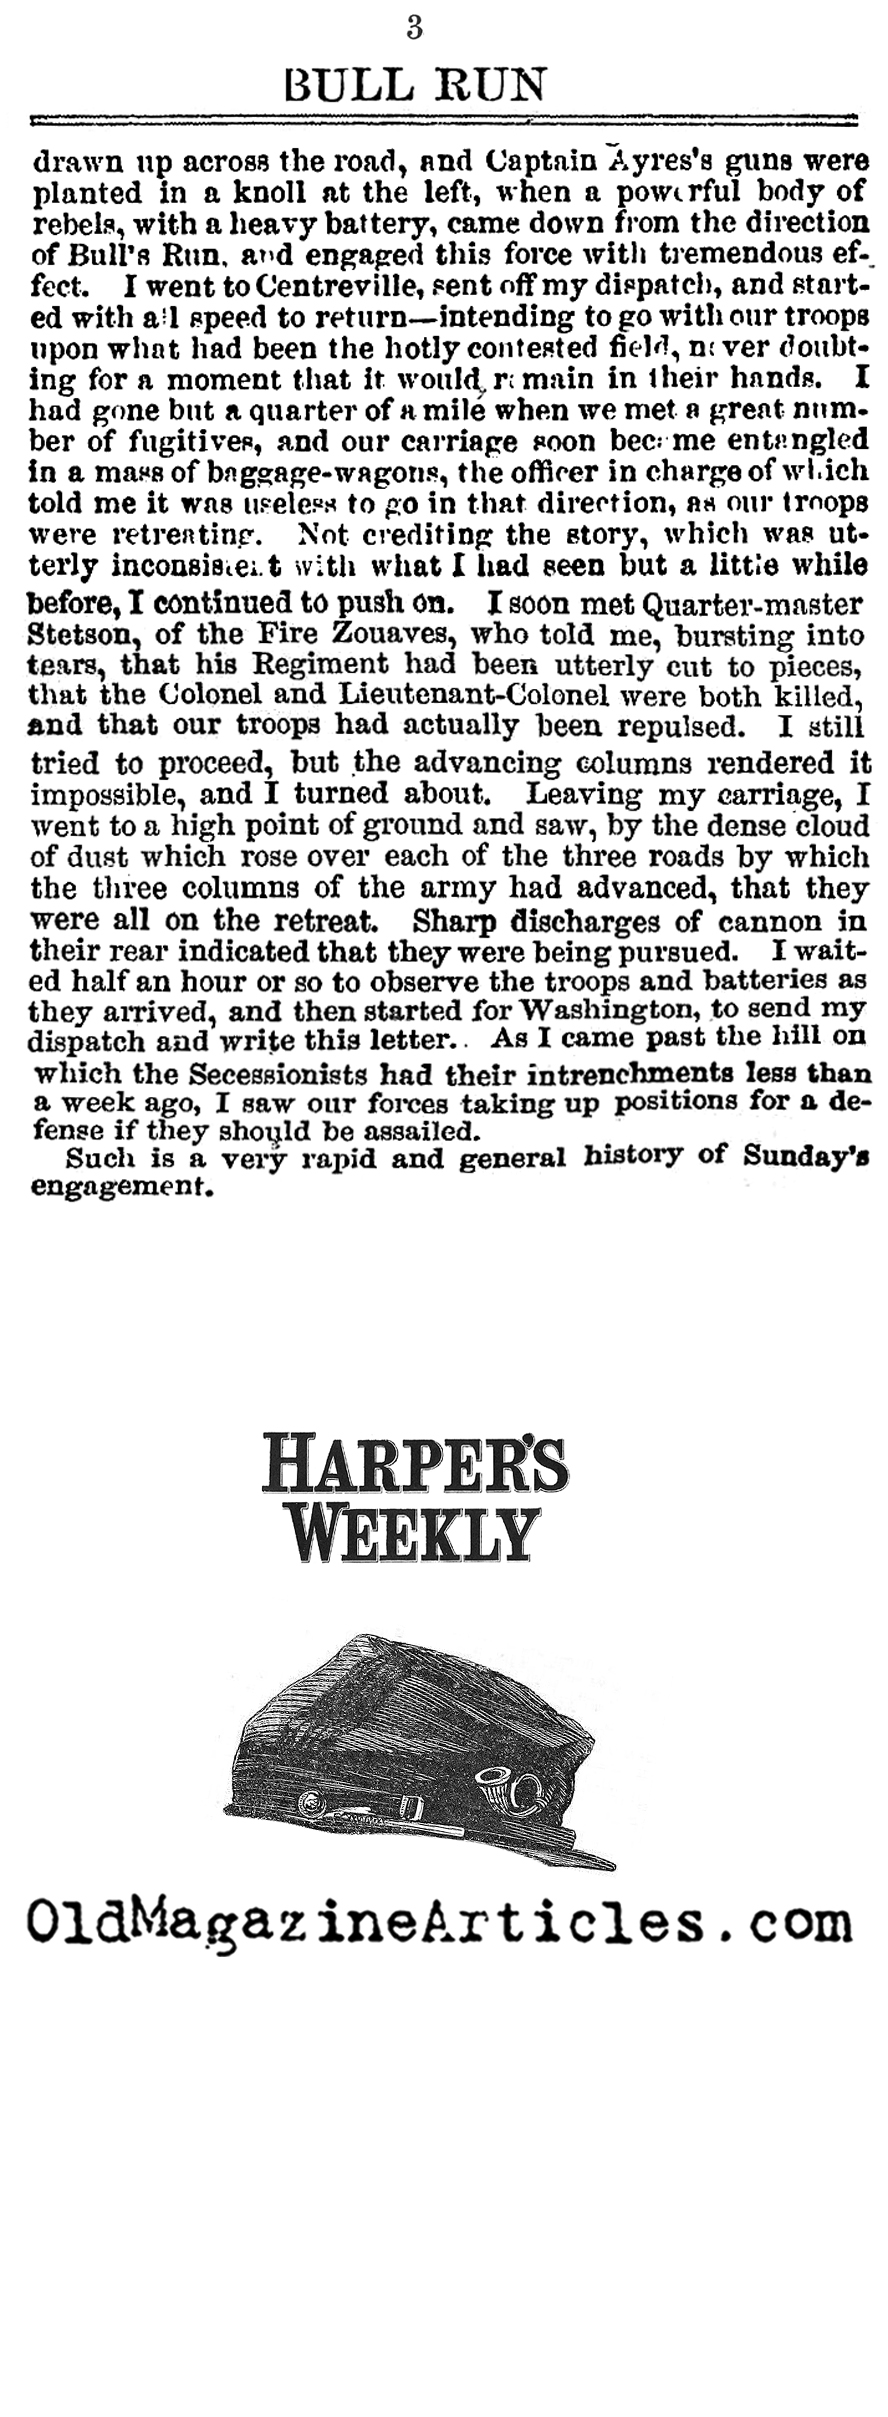 The Battle of Bull Run (Harper's Weekly, 1861)